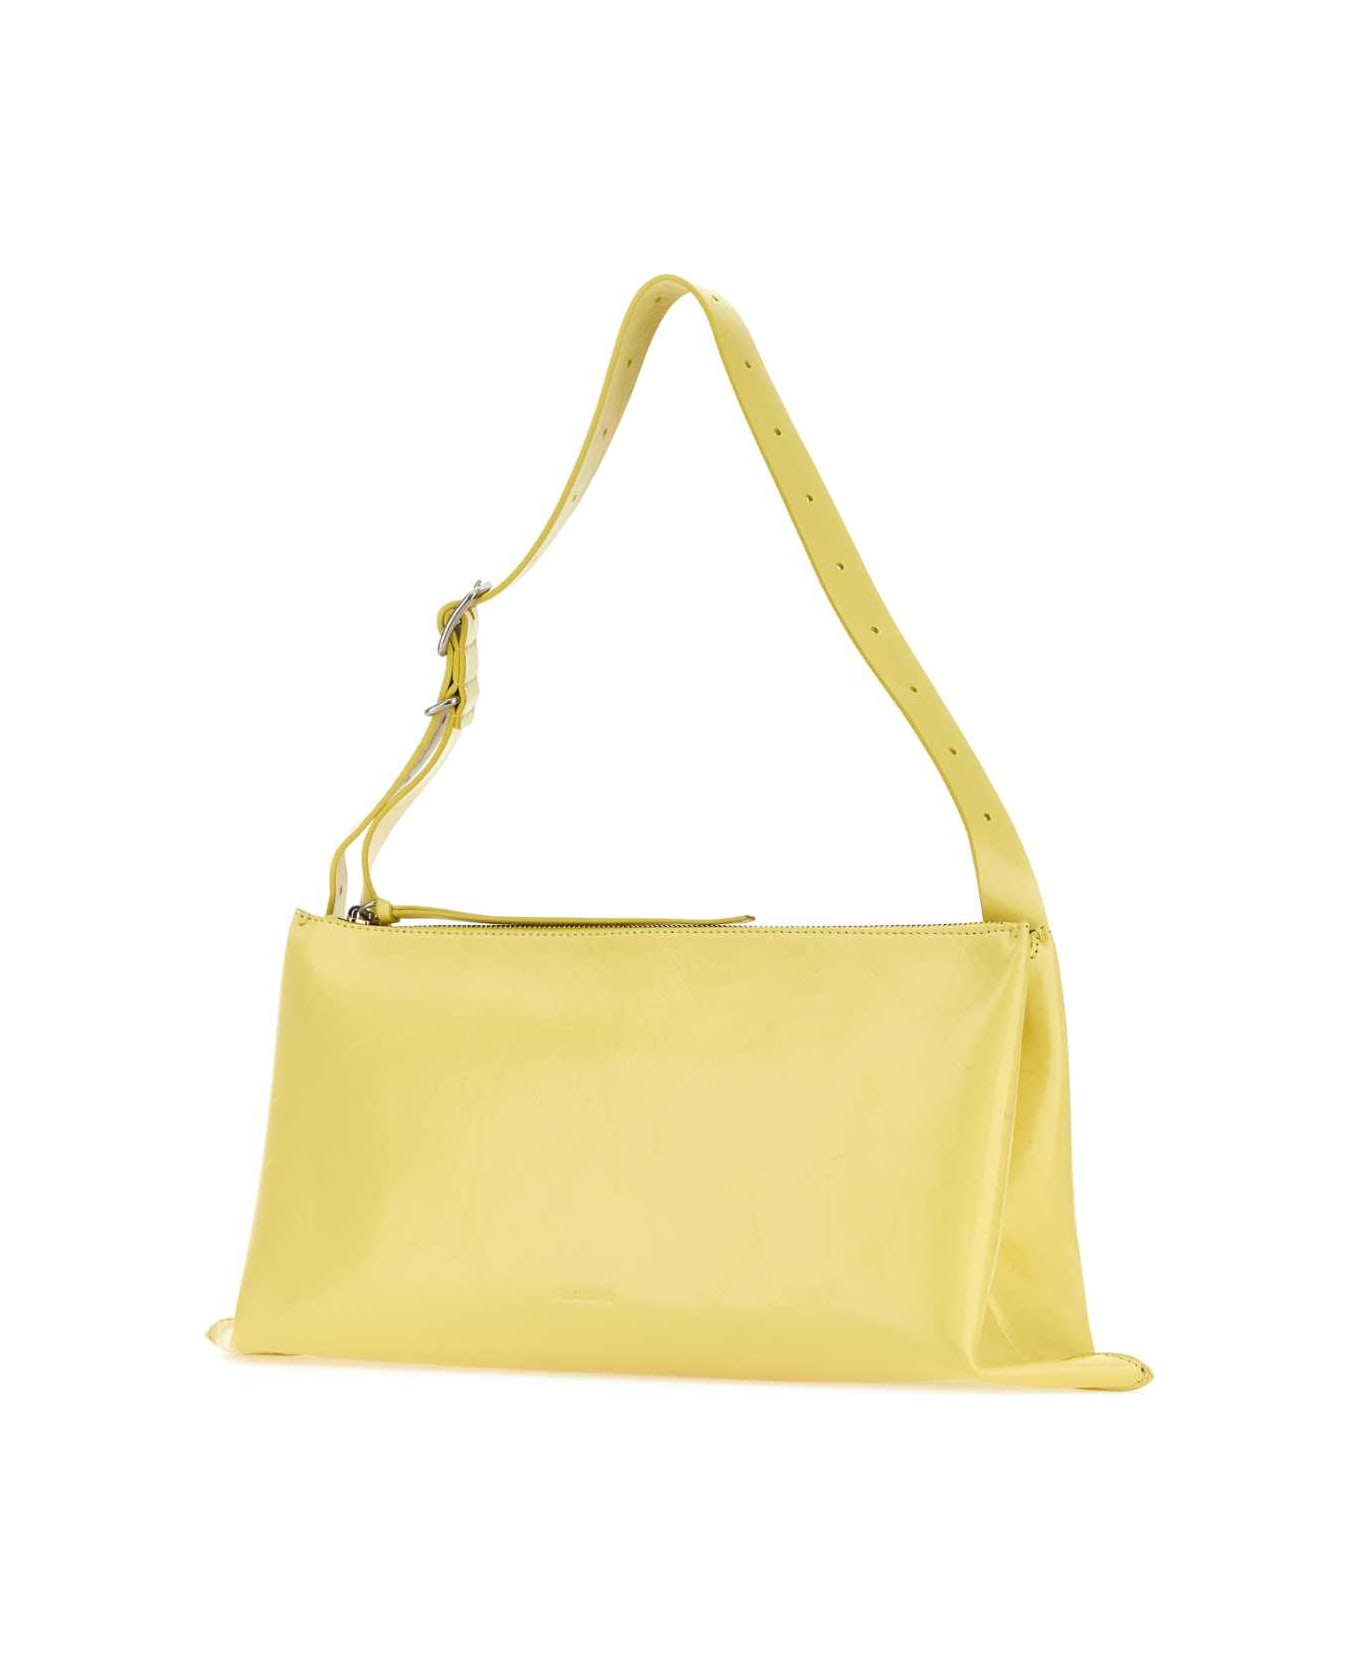 Jil Sander Yellow Leather Shoulder Bag - PASTELYELLOW